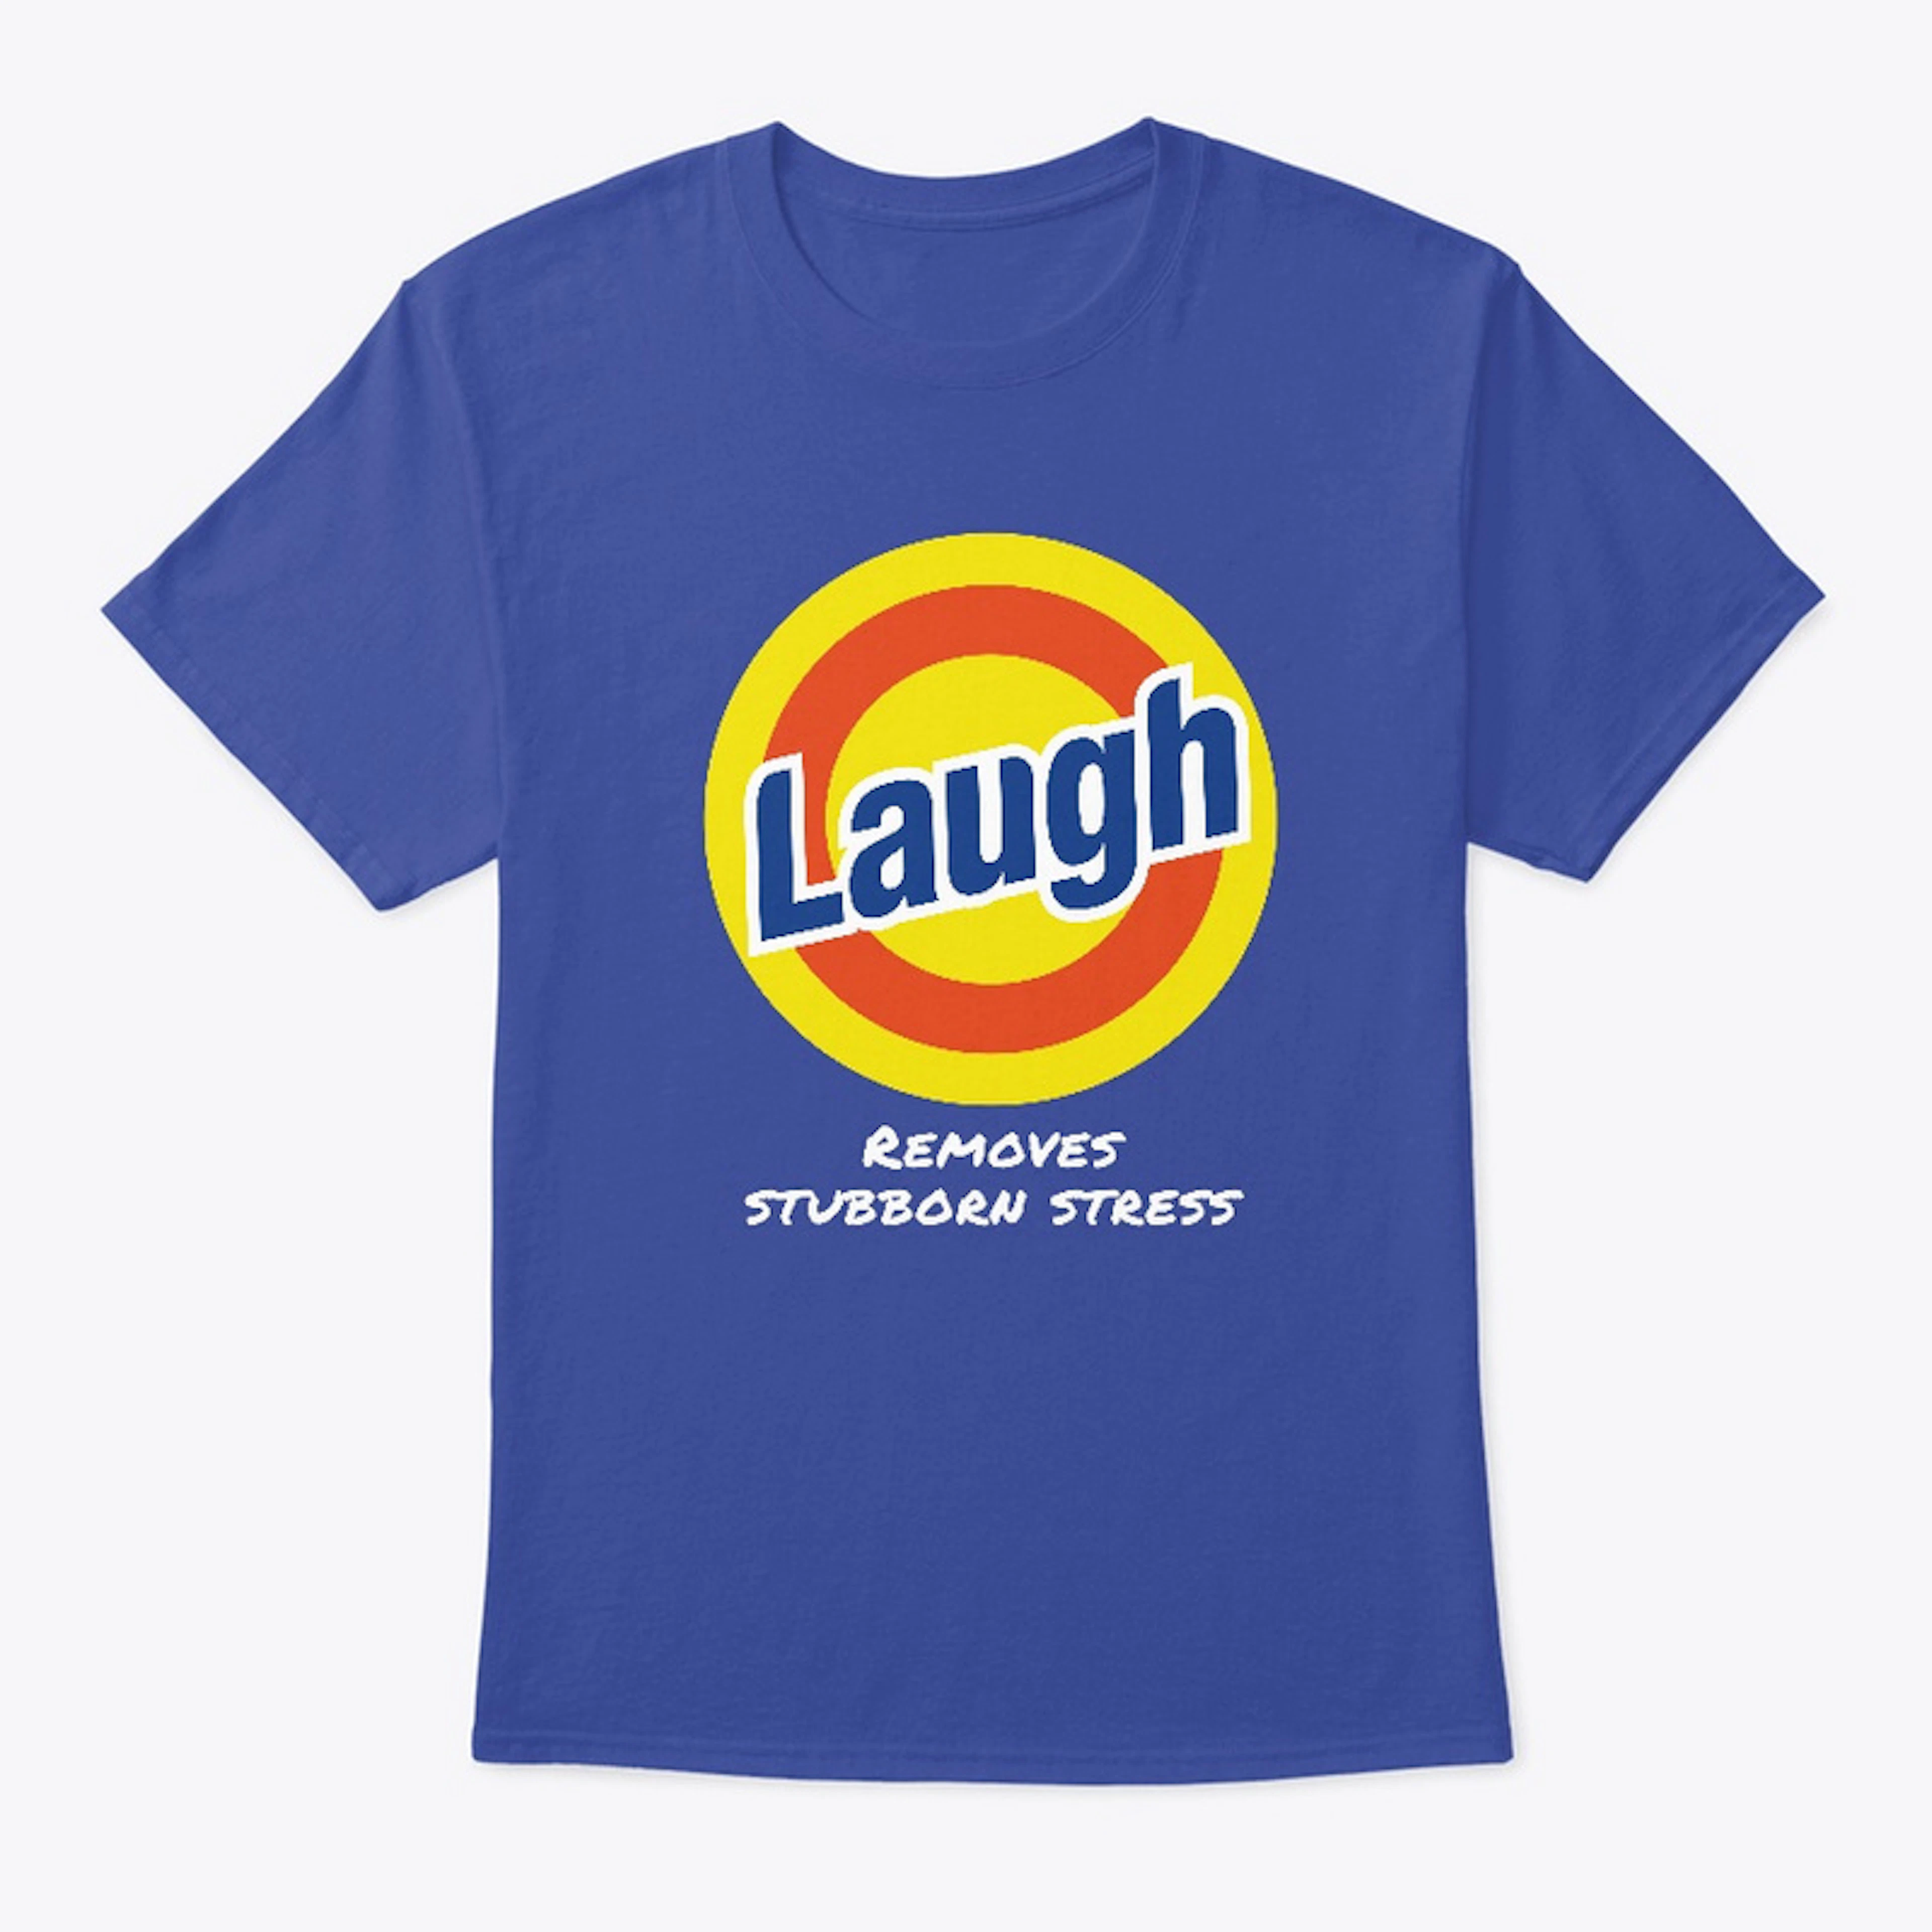 Laugh - Removes stubborn stress